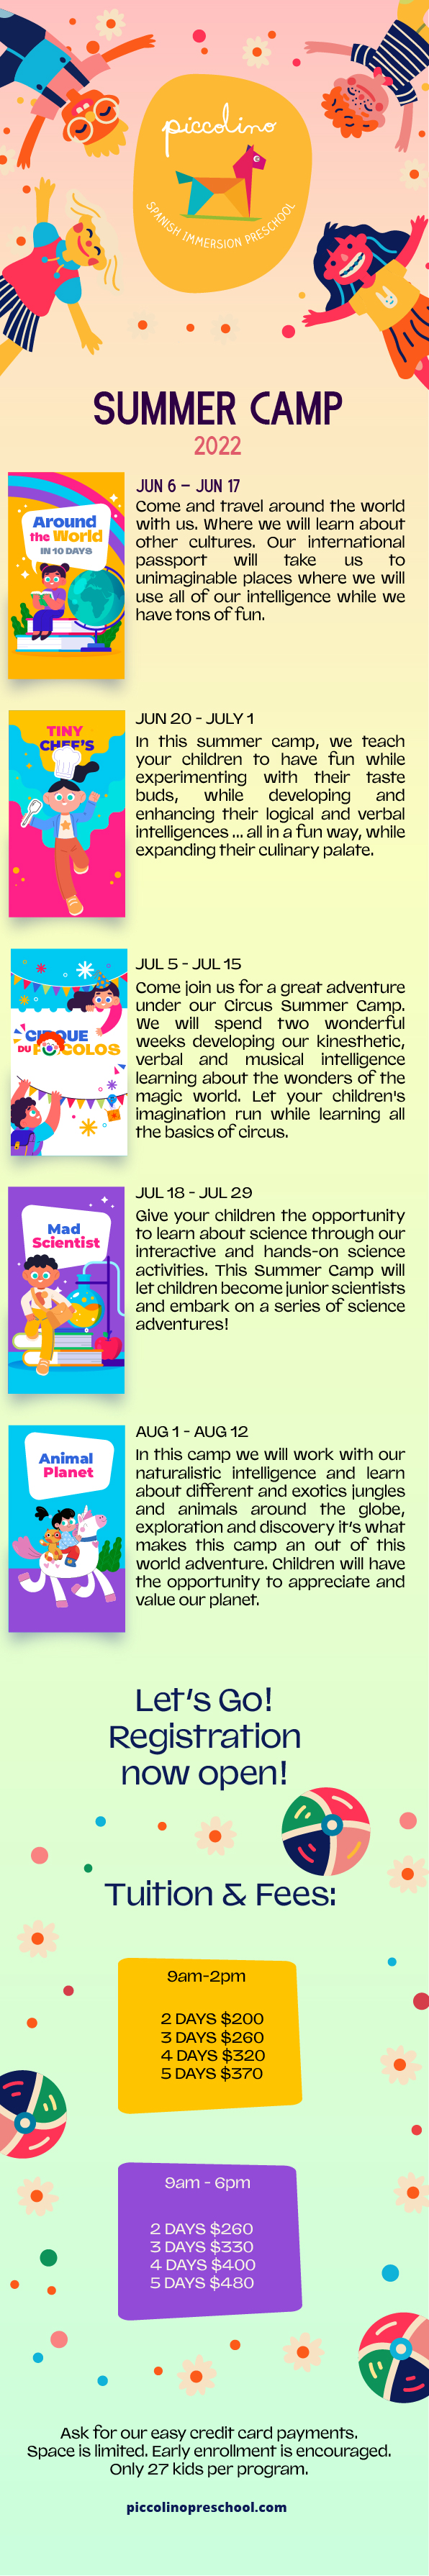 Summer Camp by Piccolino Preschool